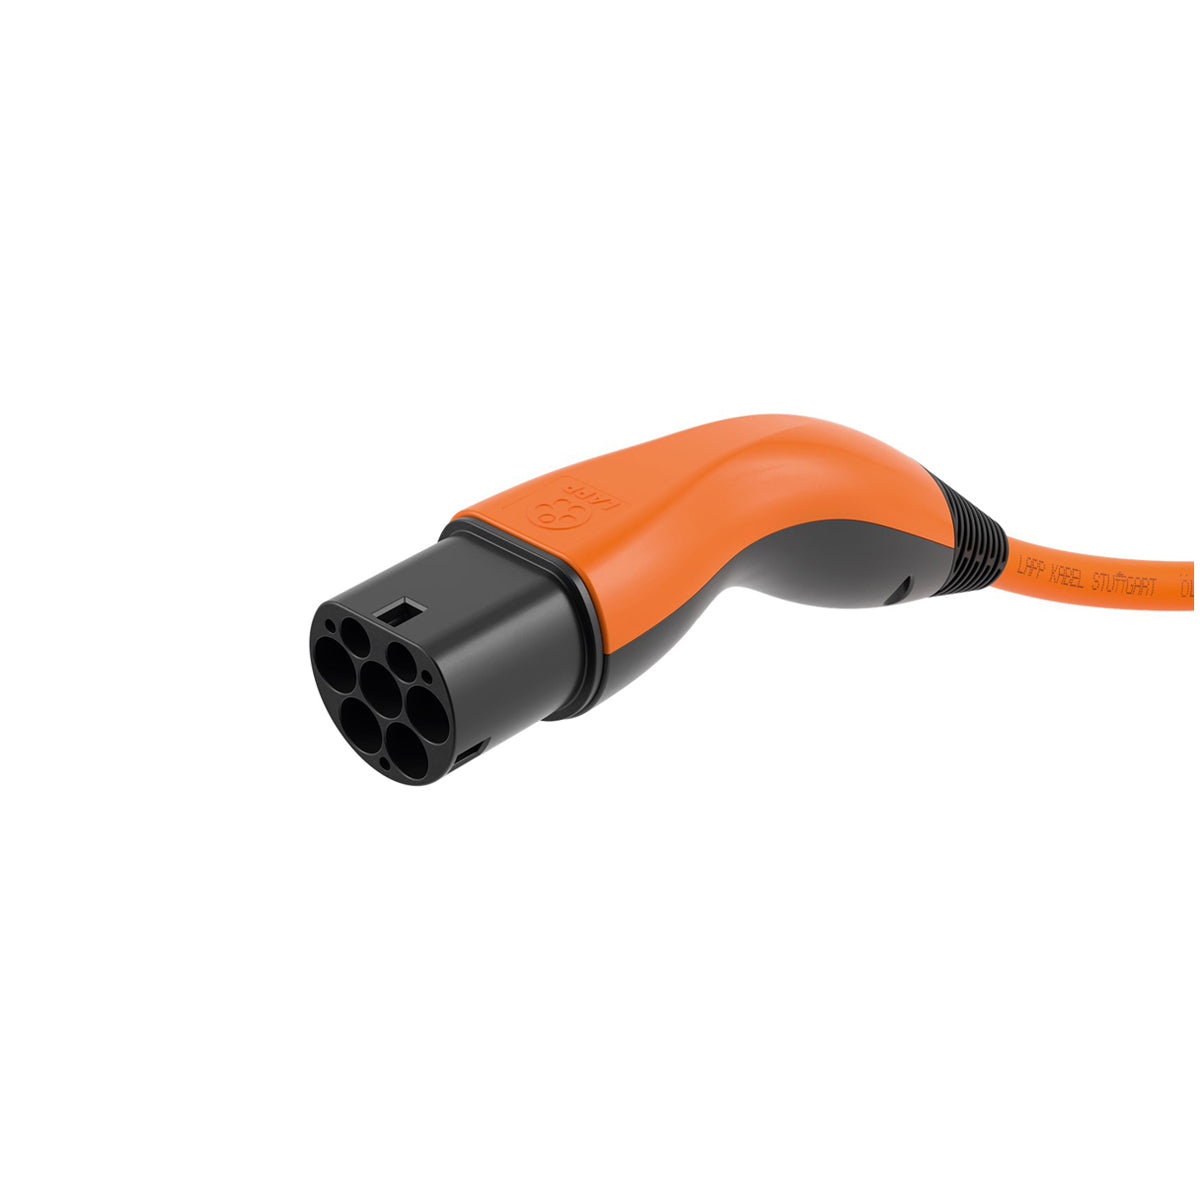 LAPP EV Charge Cable Type 2 (7.4kW-1P-32A) 7m - Orange.